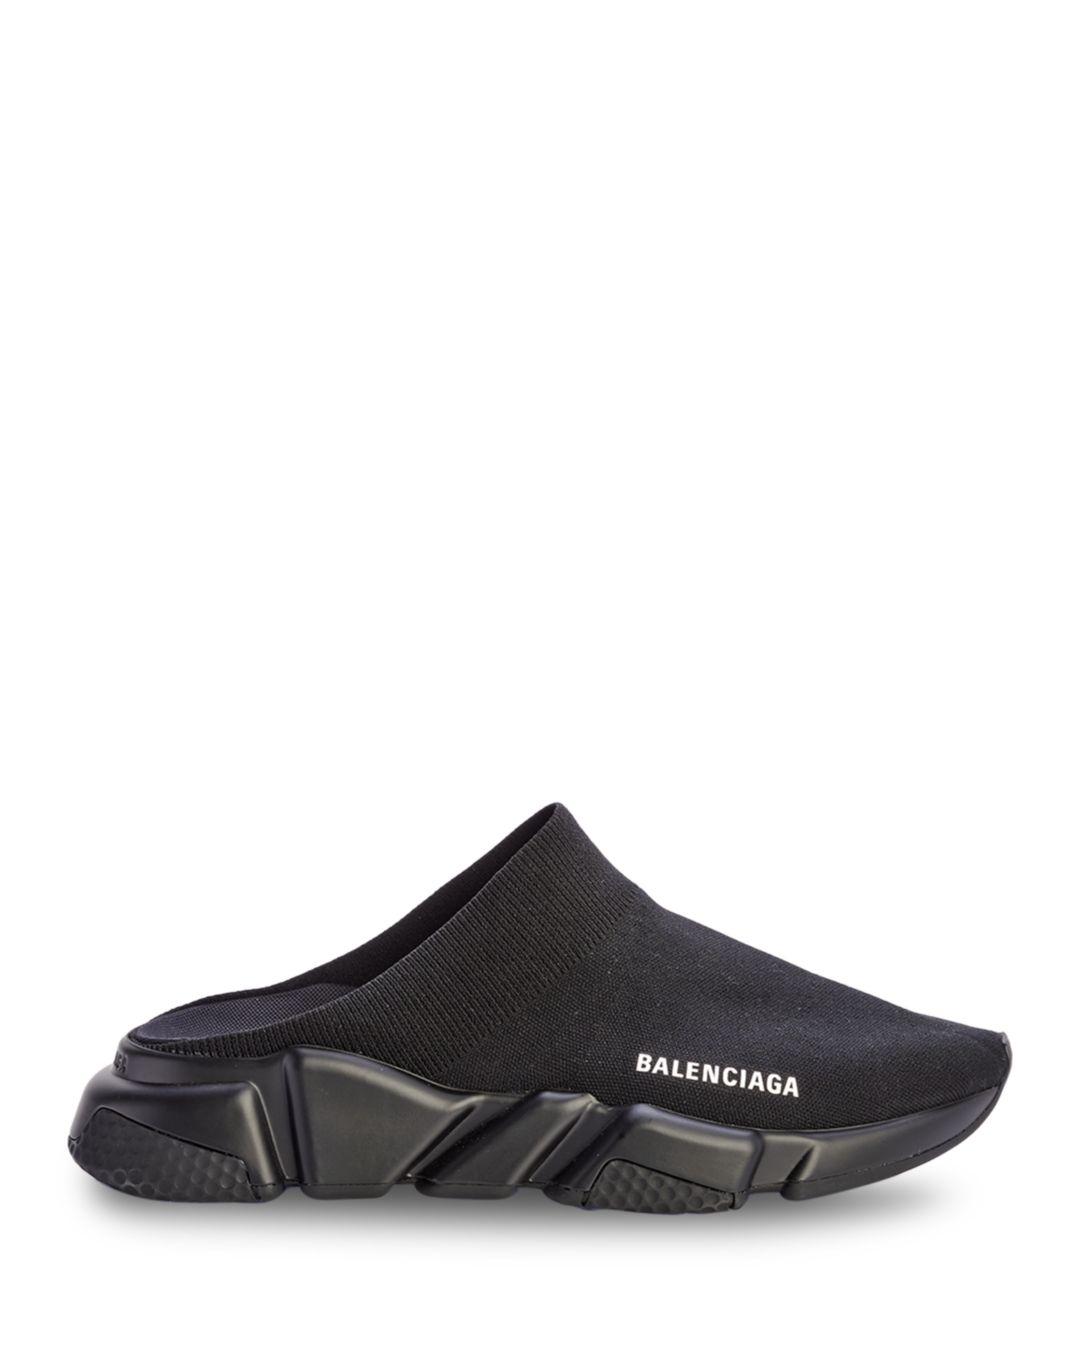 Balenciaga Speed Mule Slip On Sneakers in Black | Lyst